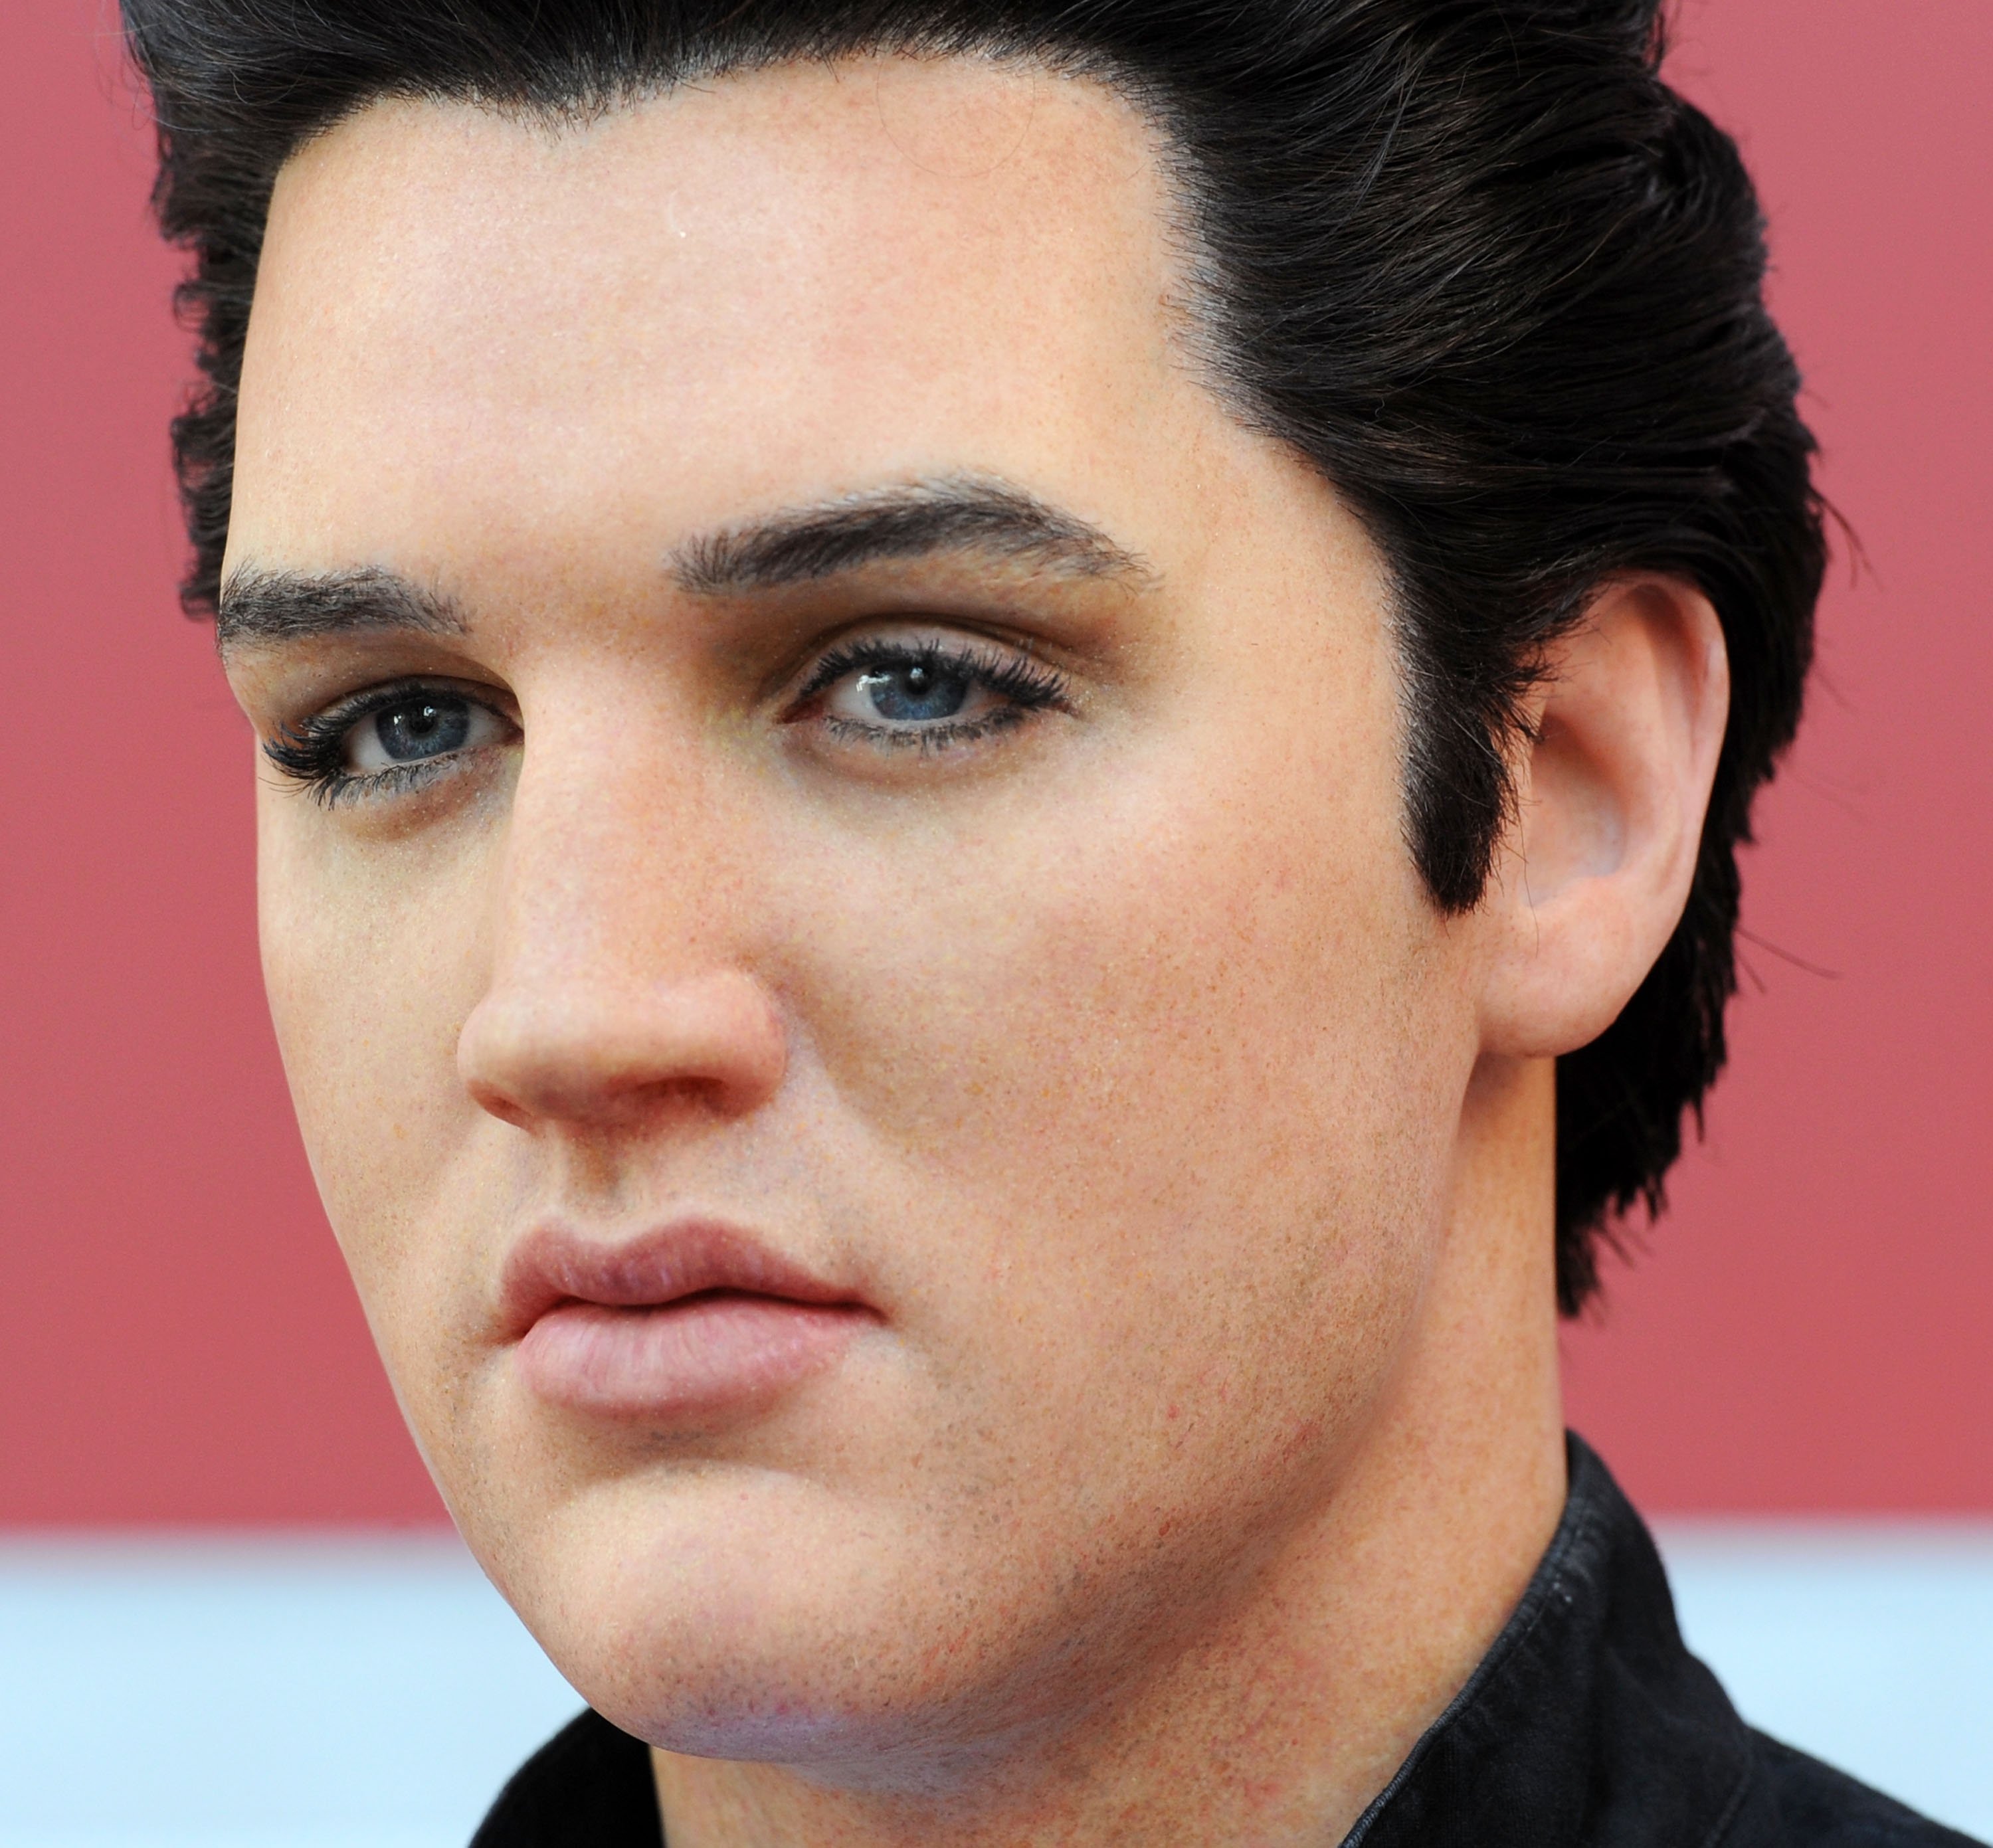 Elvis Presley | Source: Getty Images